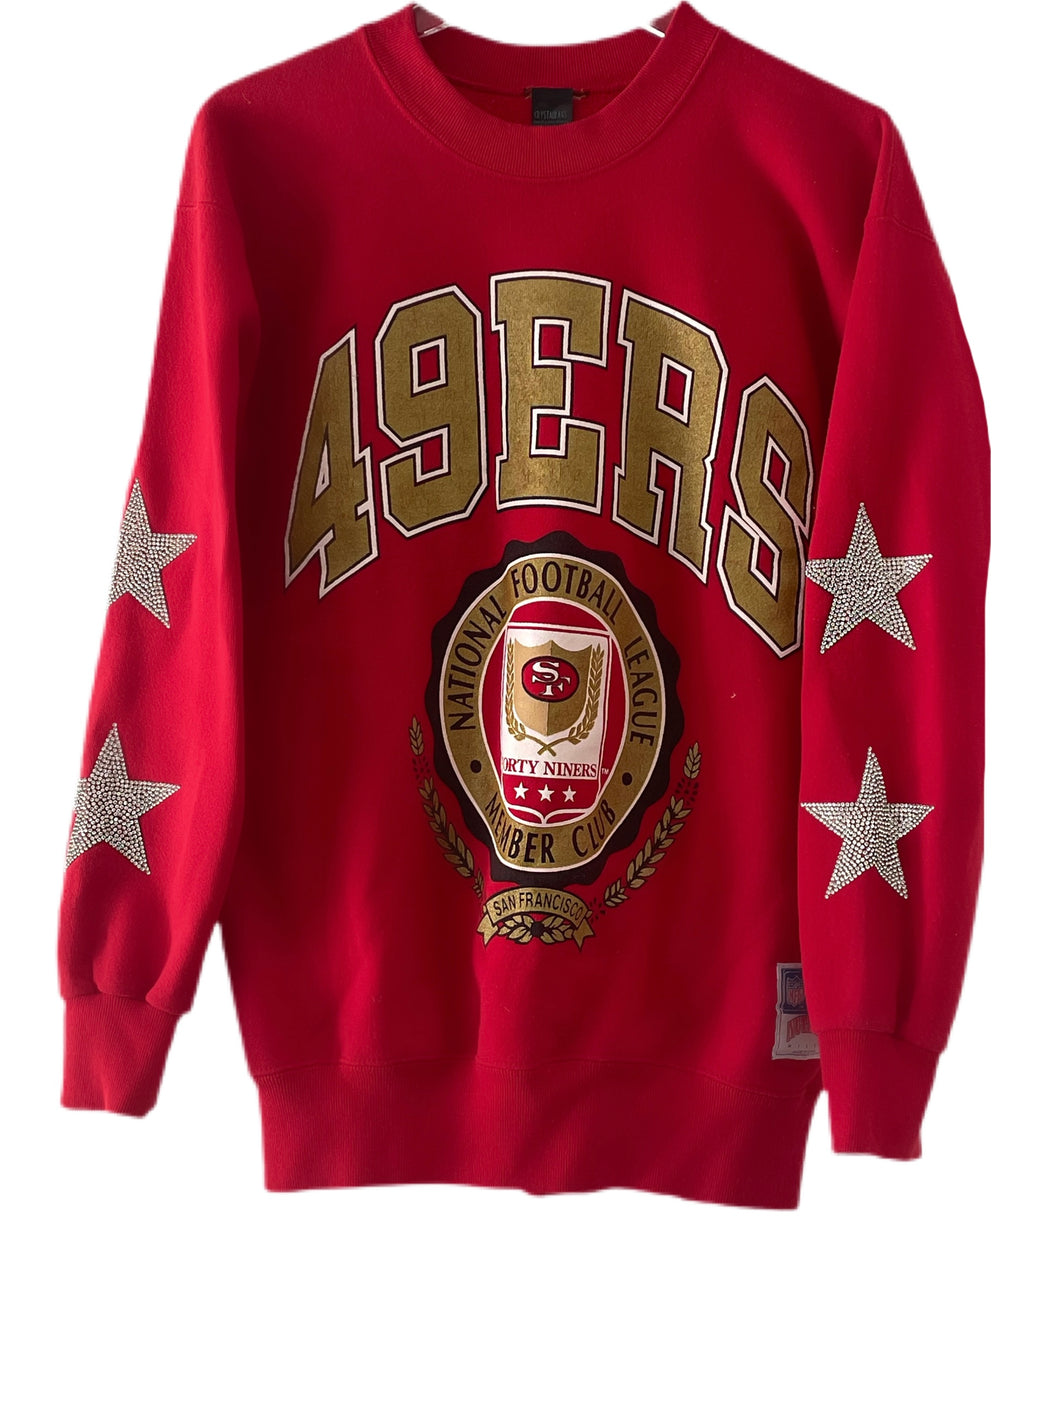 San Francisco 49ers, NFL One of a KIND Vintage Sweatshirt with Crystal Star Design